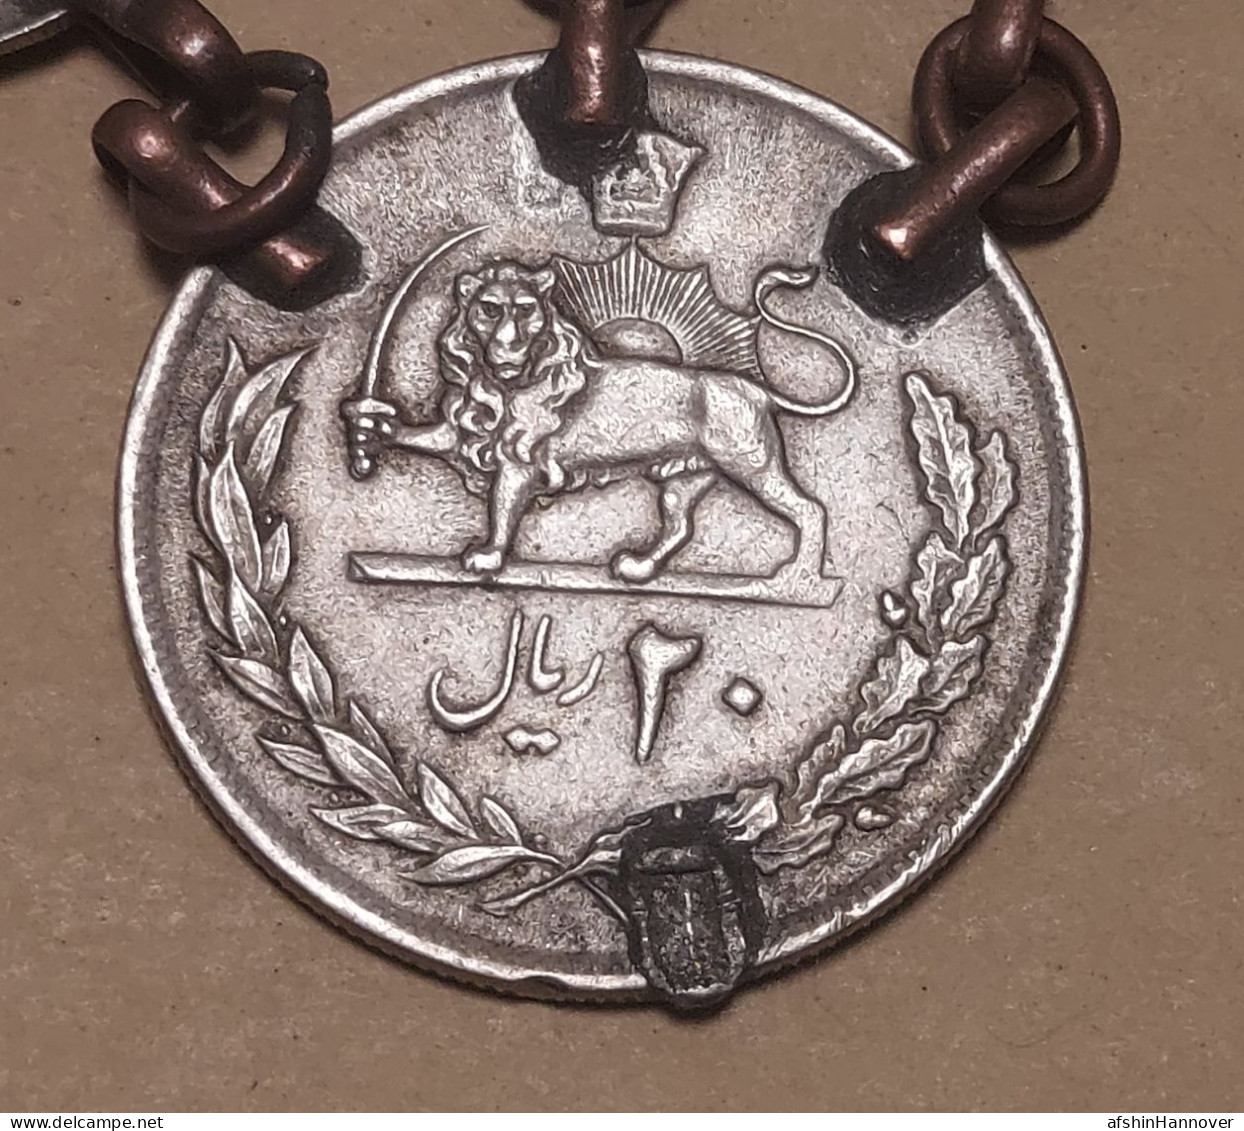 Iran  Pahlavi آویز زیبای لباس سنتی با سکه های پهلوی  Beautiful traditional dress pendant with Pahlavi coins